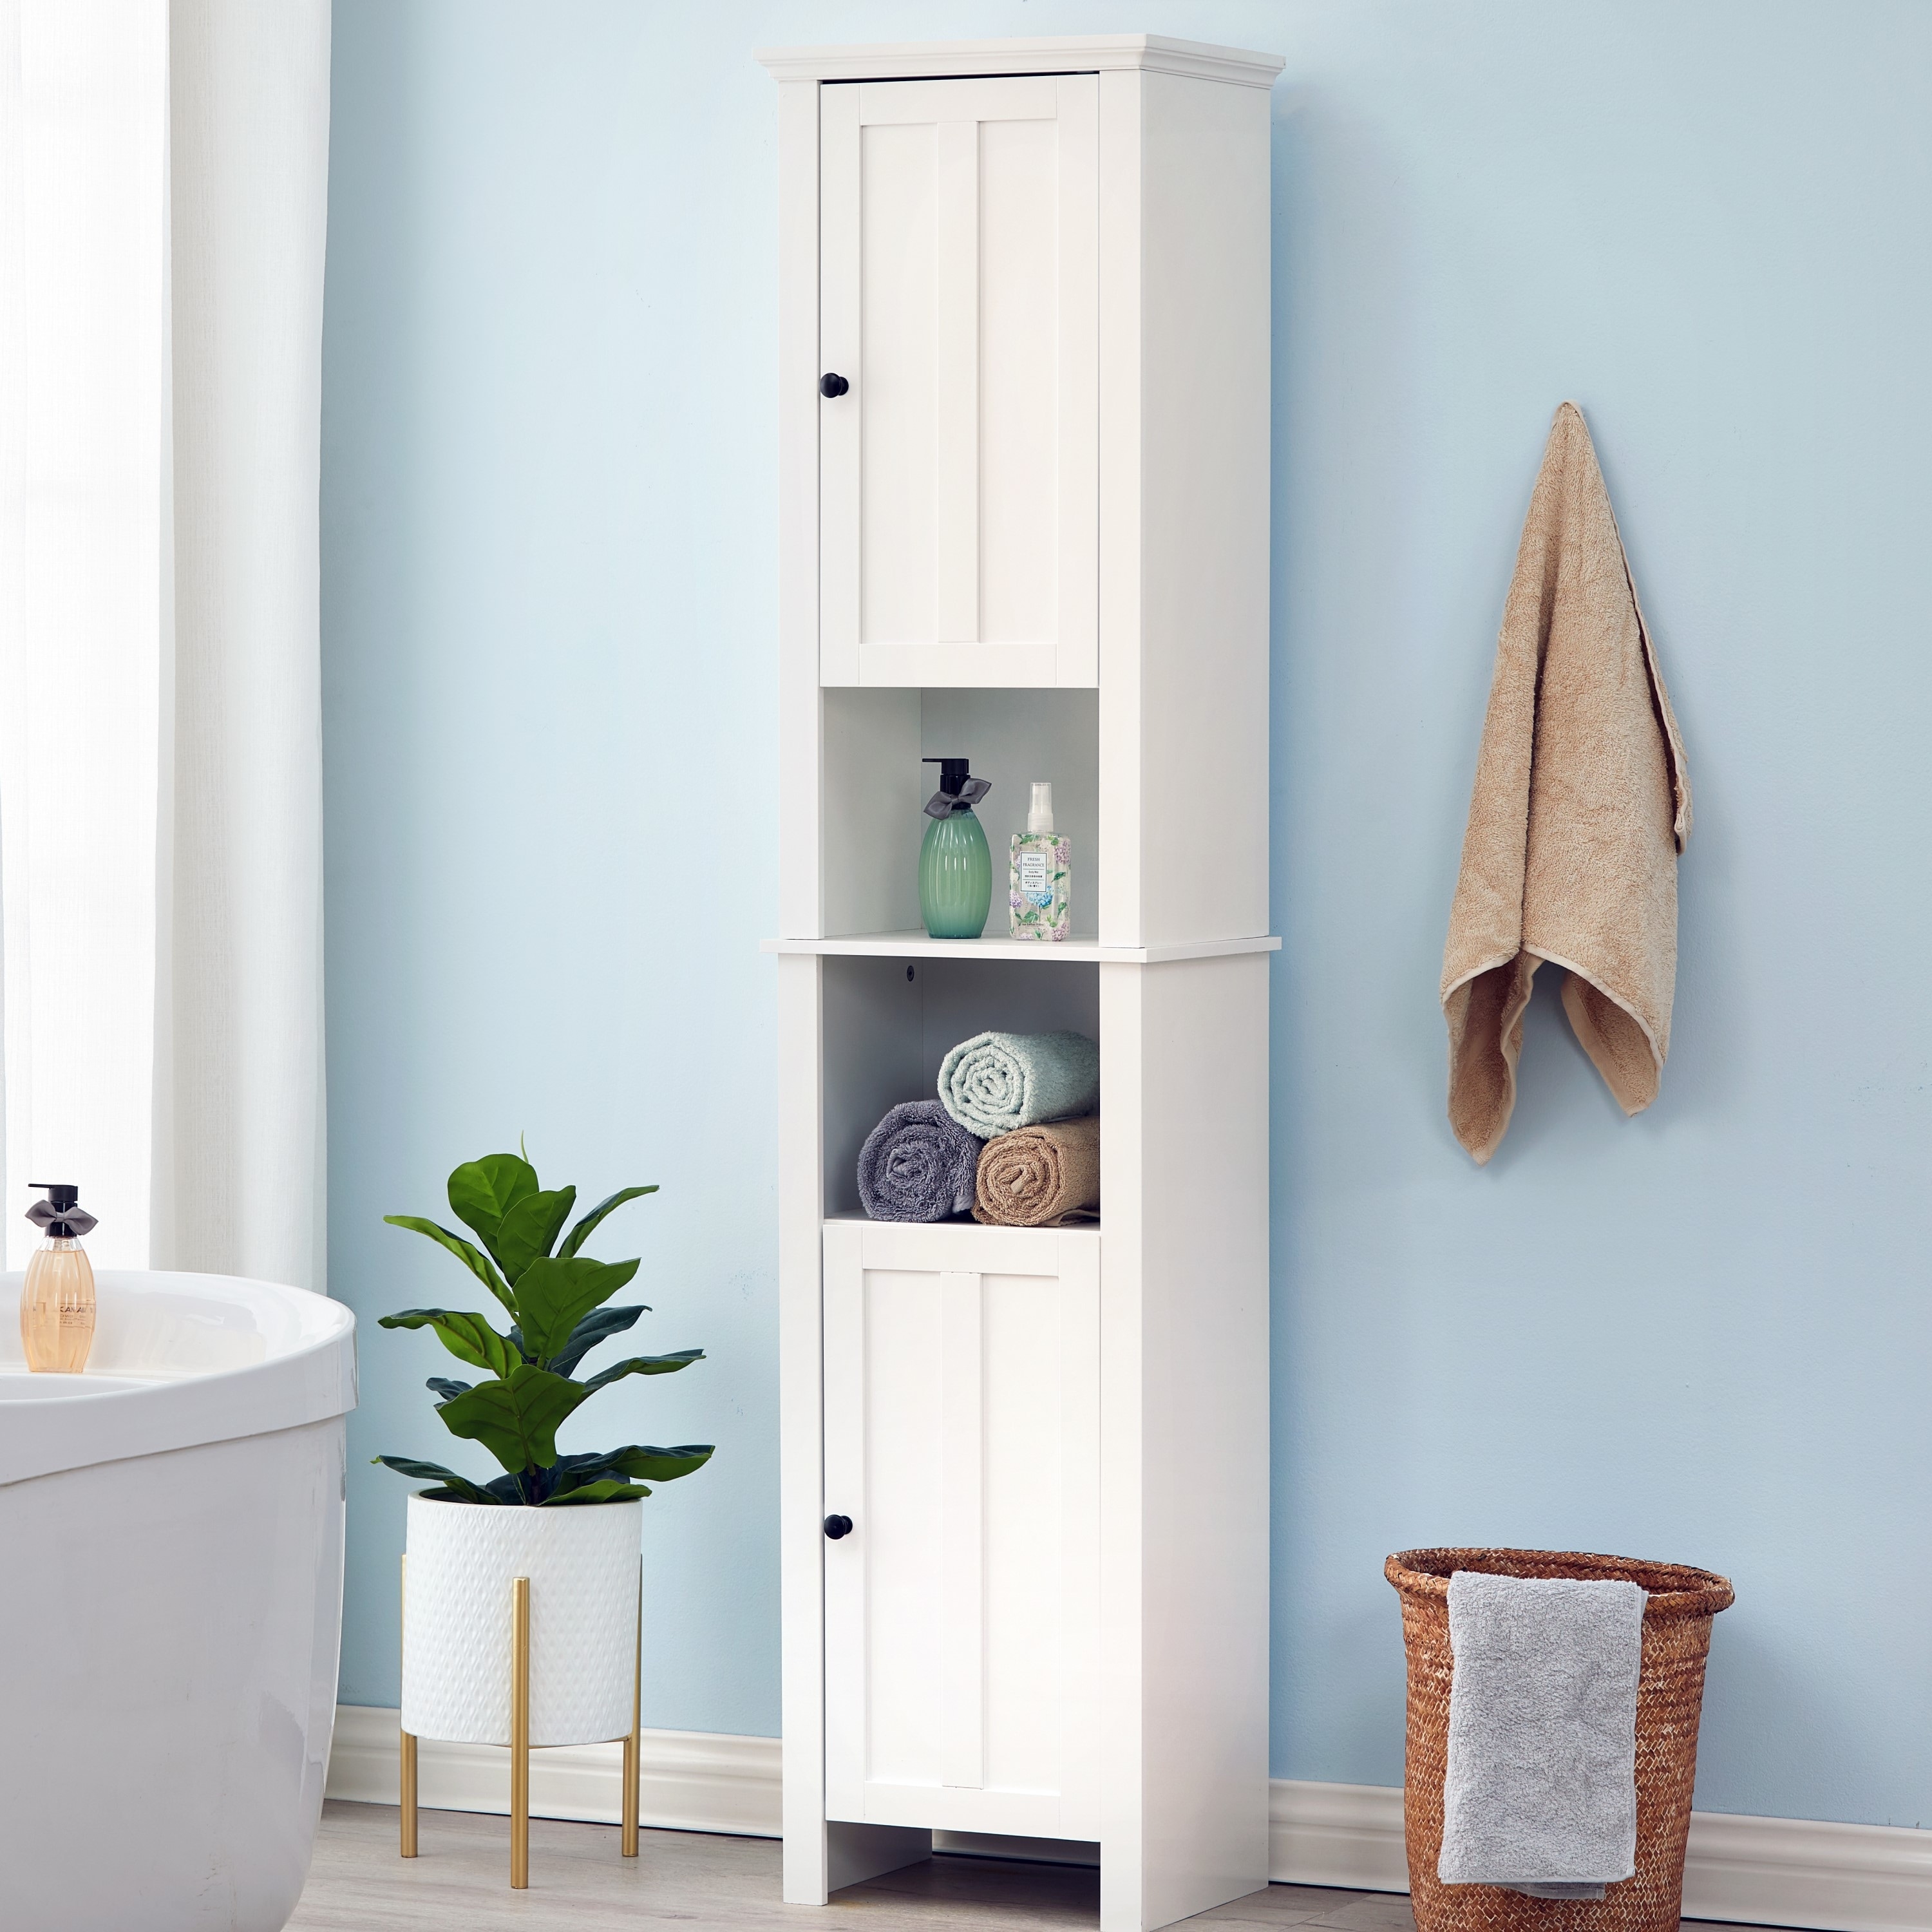 Bathroom Linen Storage Floor Cabinet Mahe Bamboo - Wood